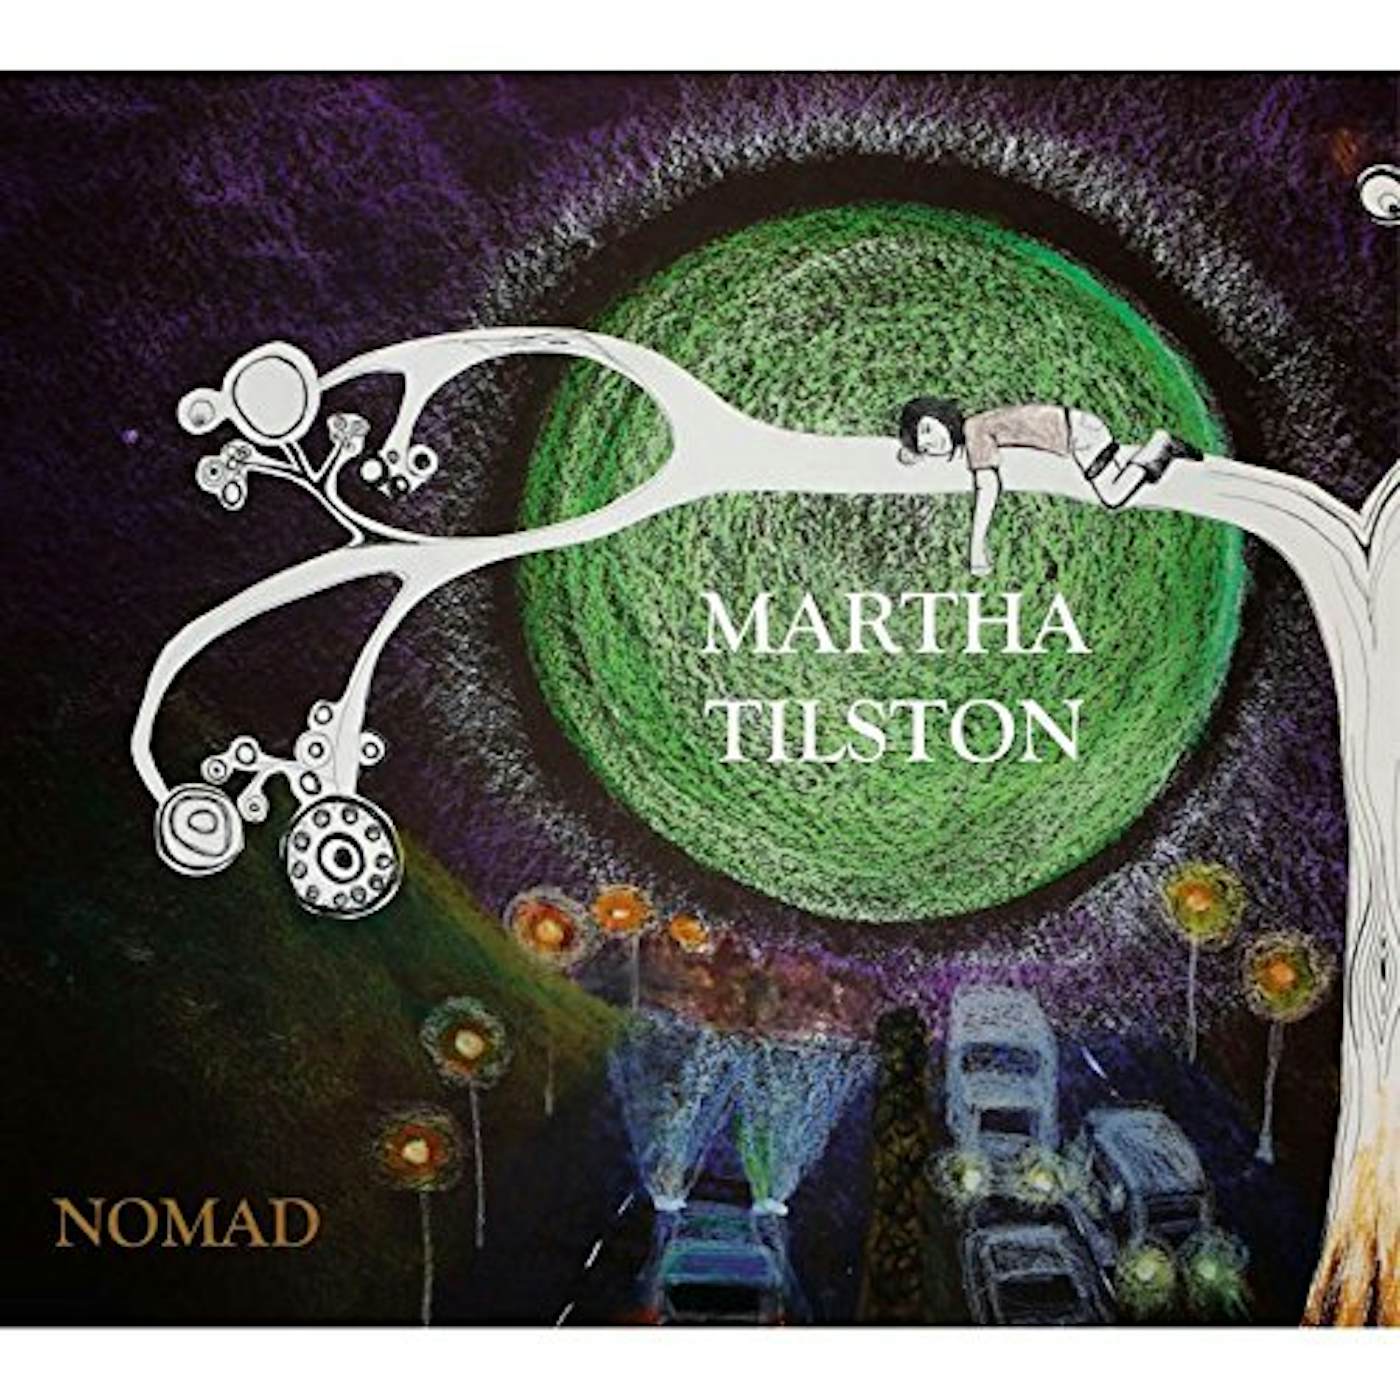 Martha Tilston NOMAD CD